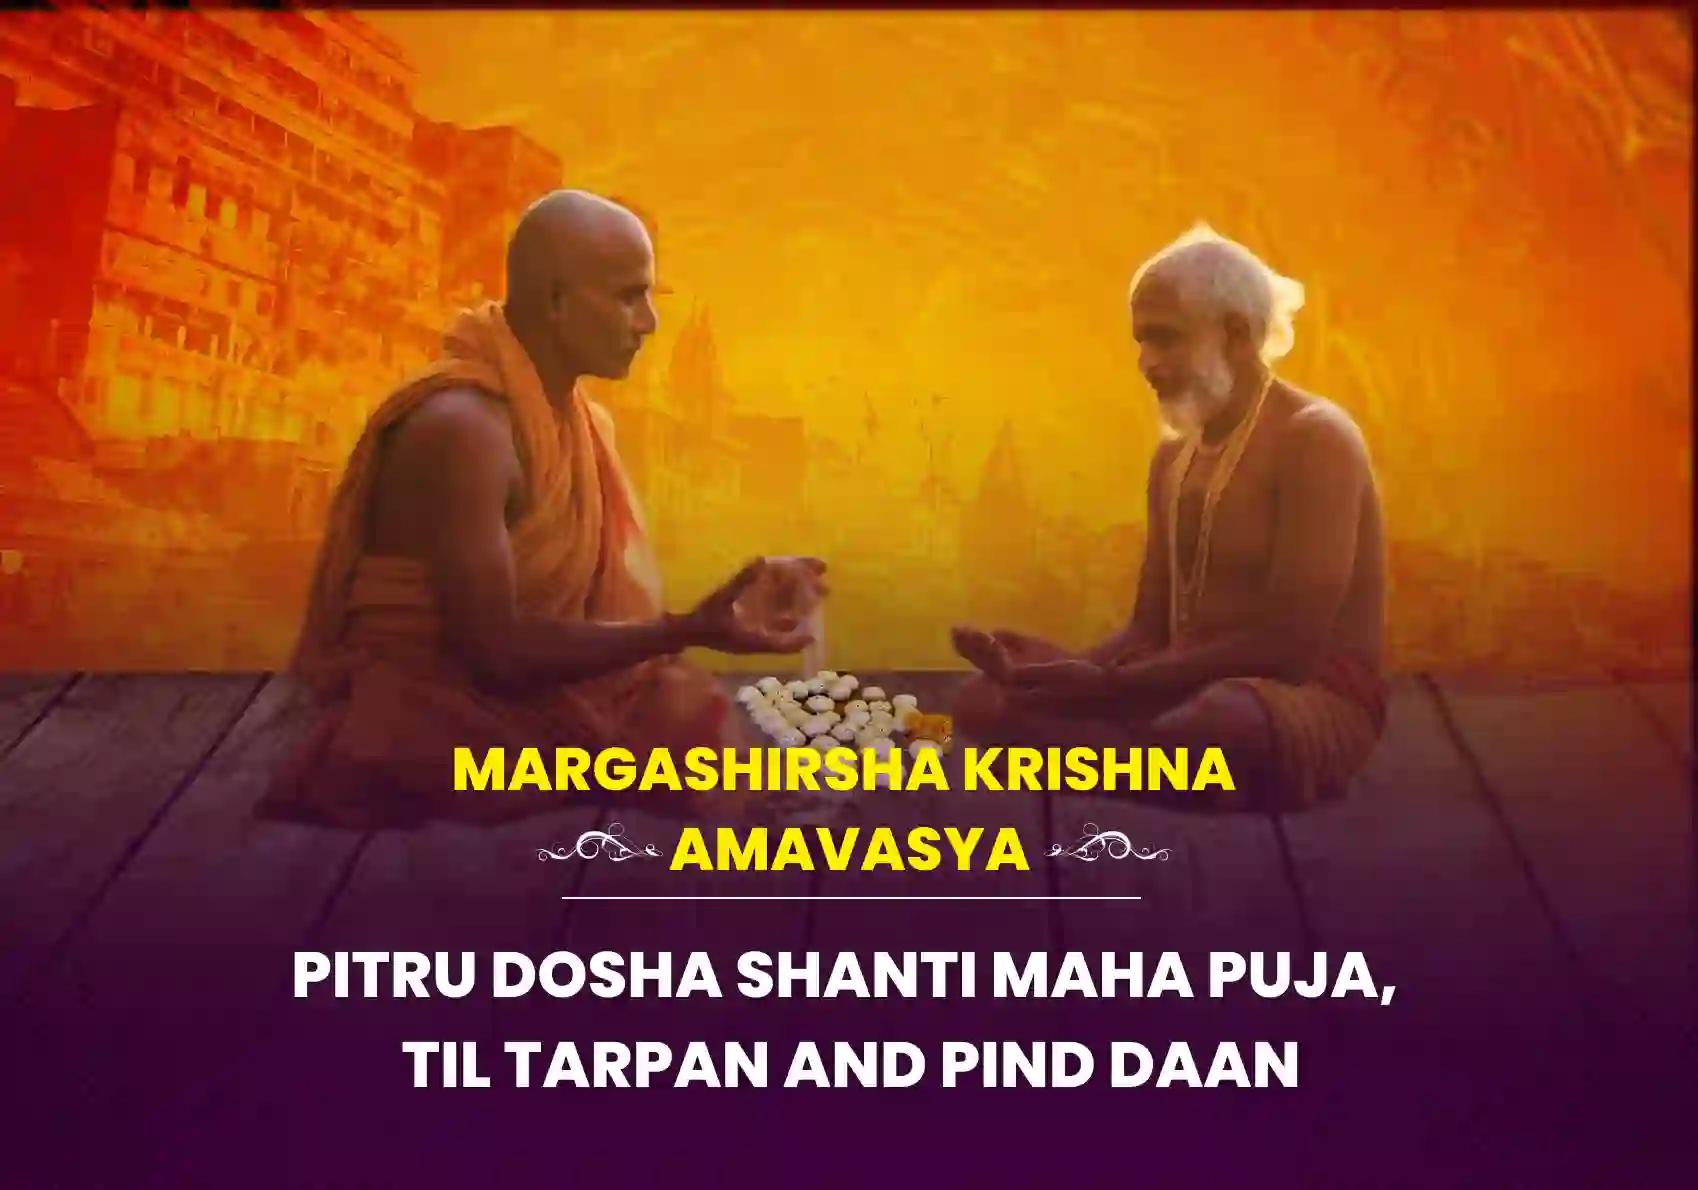 Margashirsha Krishna Amavasya Pitru Dosha Shanti Maha Puja, Til Tarpan and Pind Daan